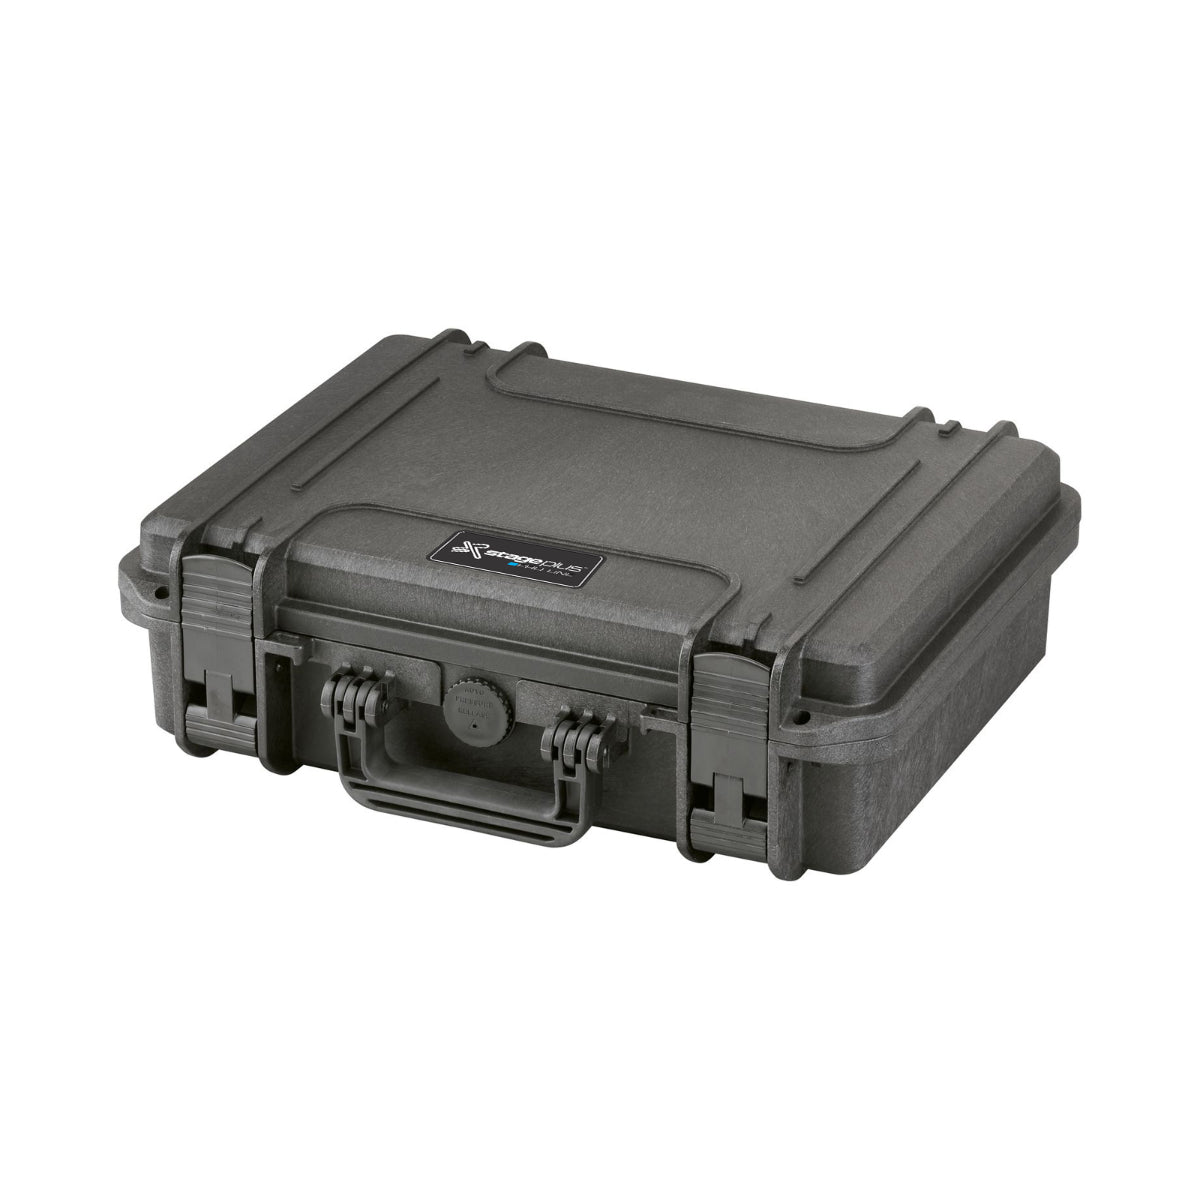 SP PRO 380H115S Black Carry Case, Cubed Foam, ID: L380xW270xH115mm